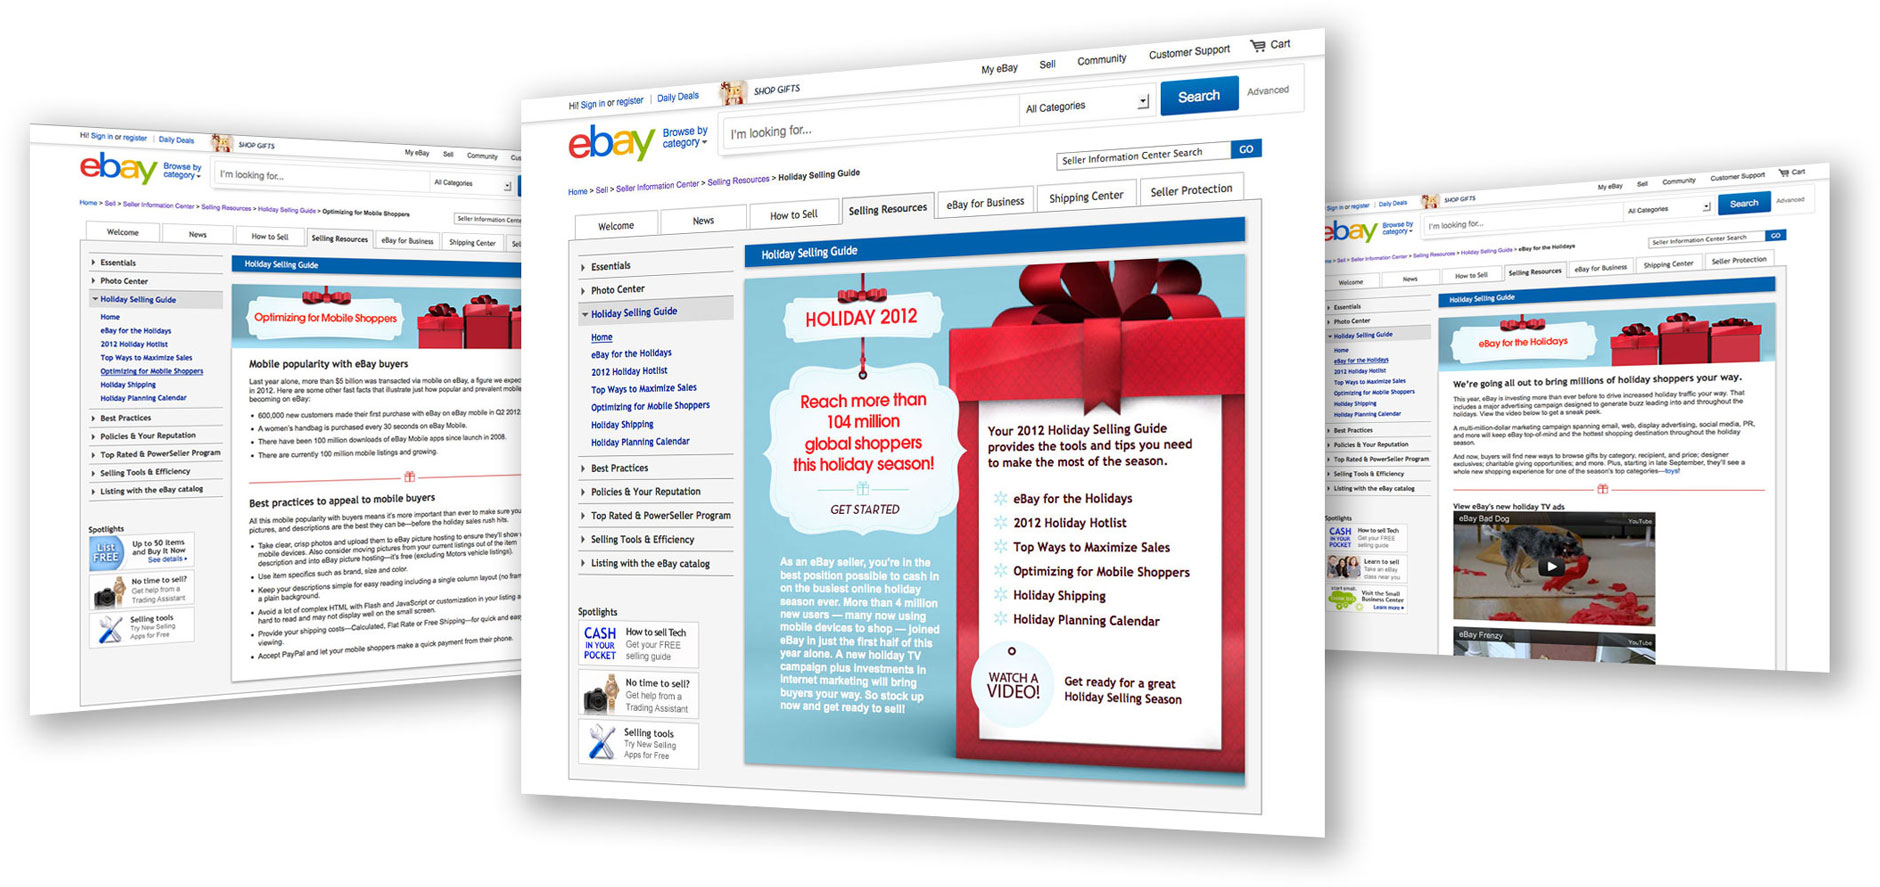 eBay holiday microsite